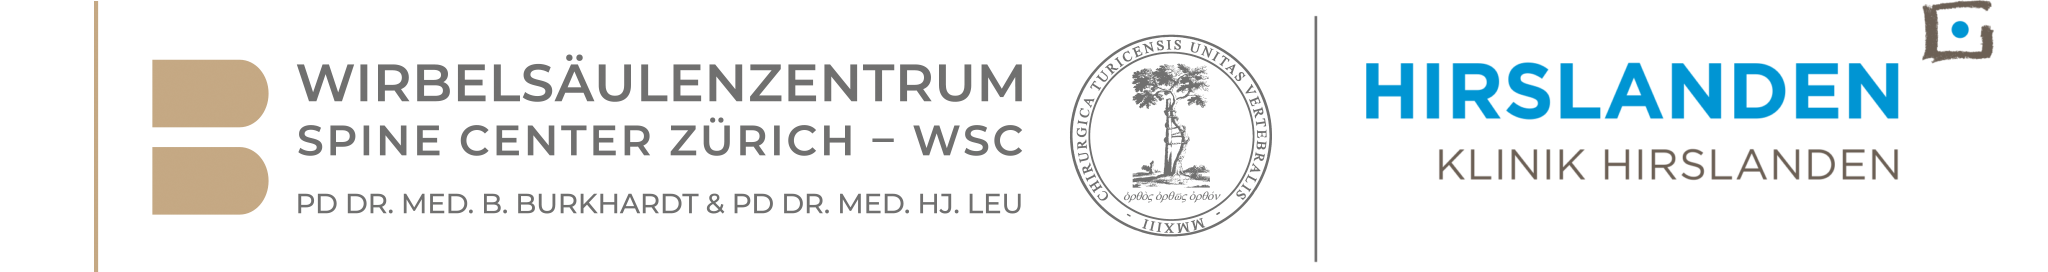 logo_wsc